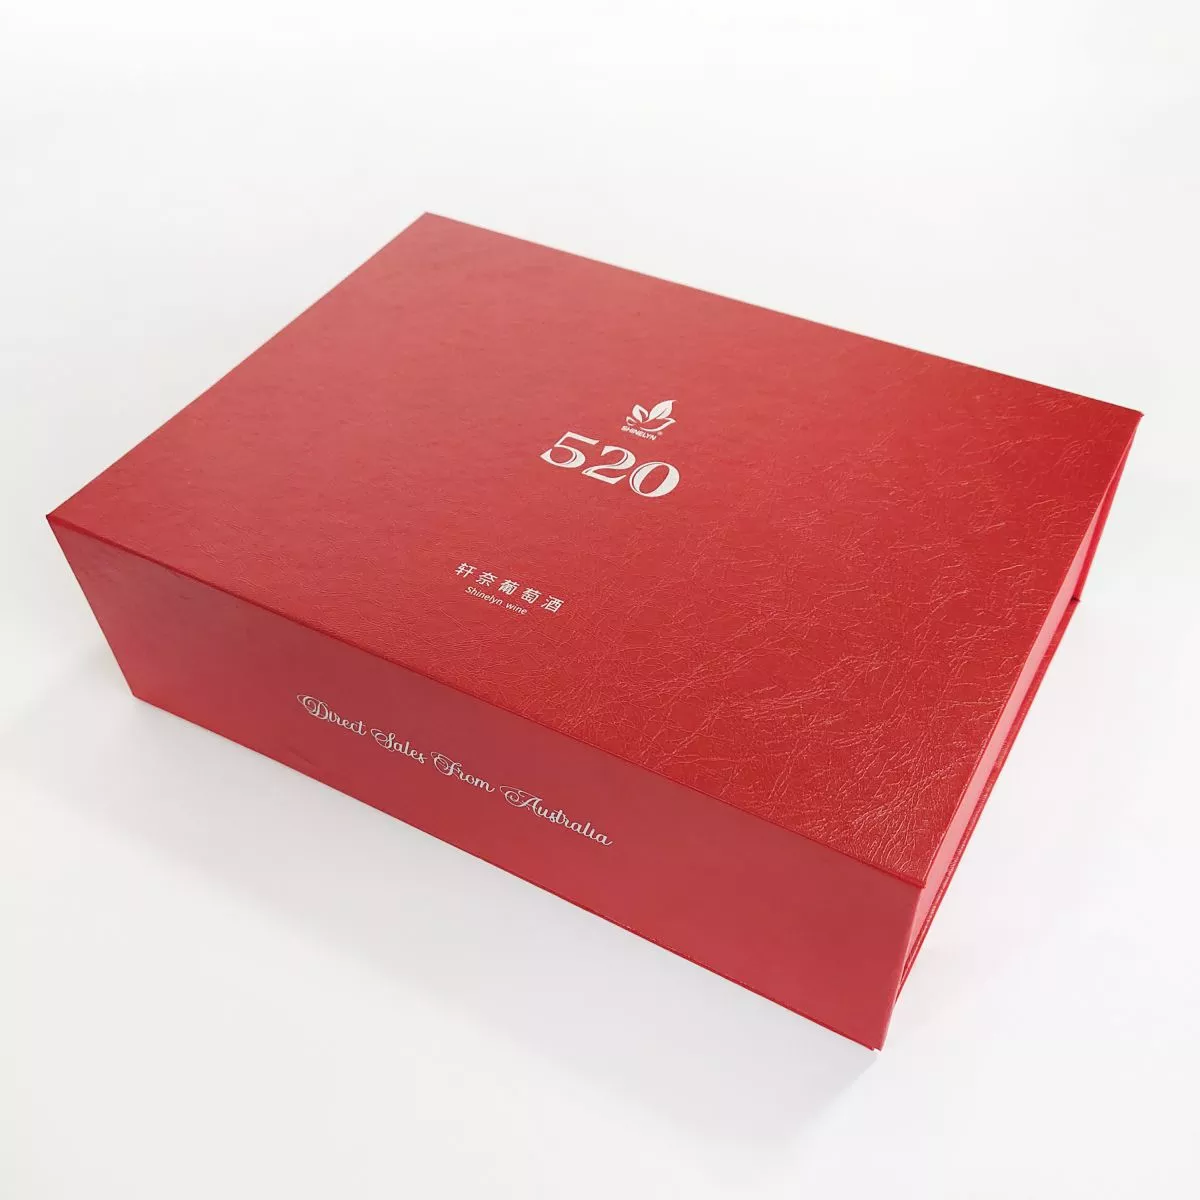 PB038 Box for Mini Champagne and Anniversary Wine Box